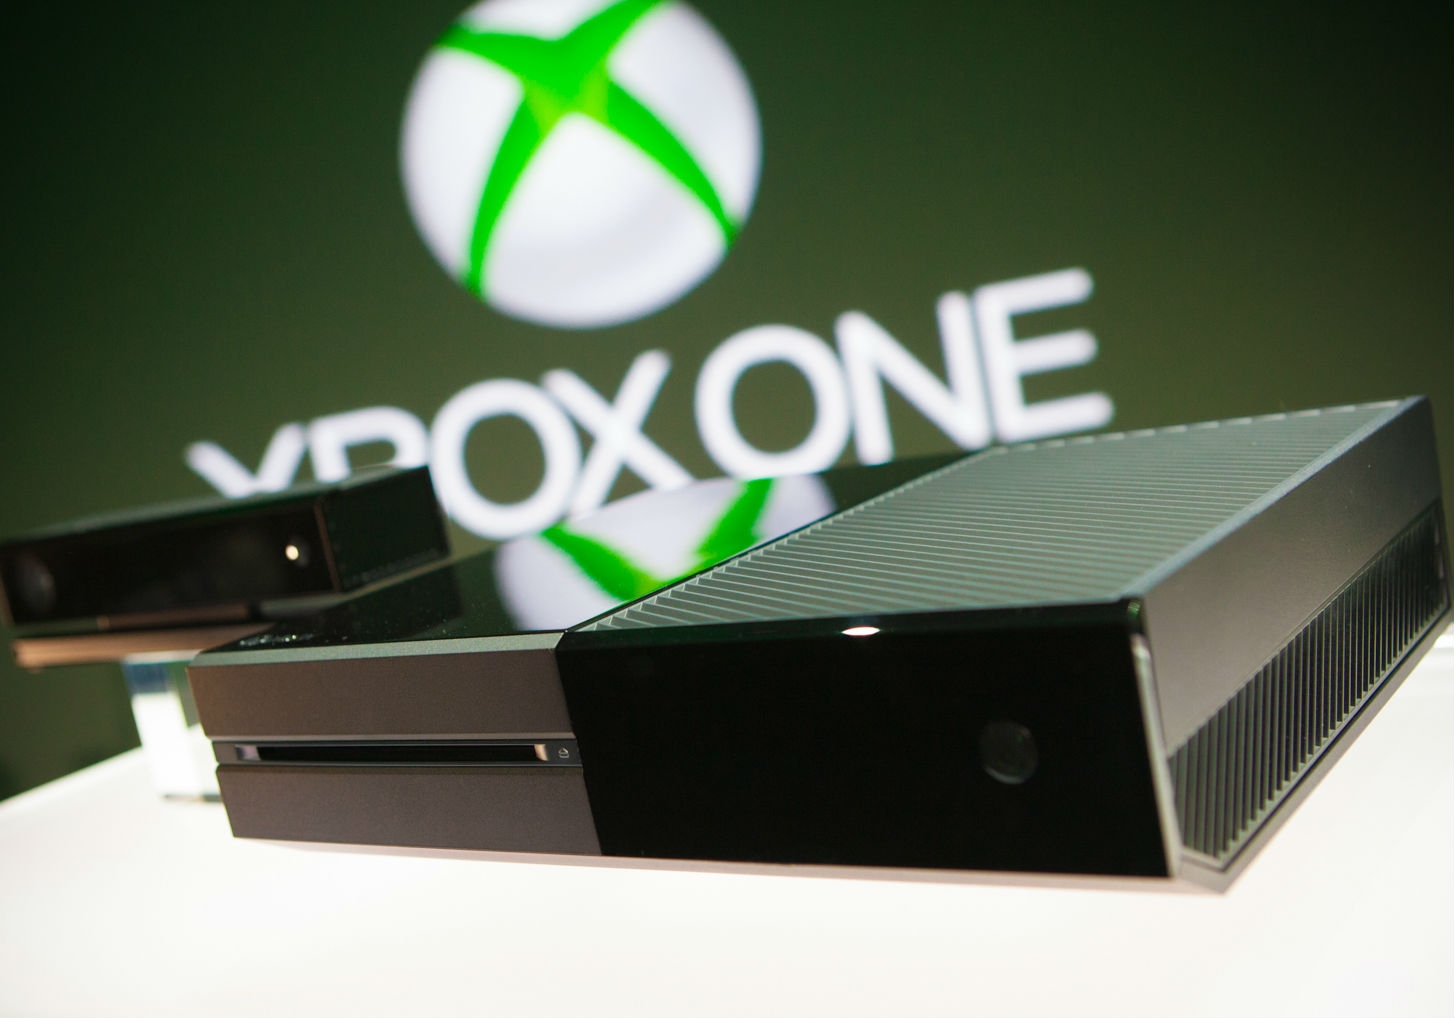 Xbox 180. Xbox 360 e Kinect. Xbox one 2013. Xbox 460. Xbox company